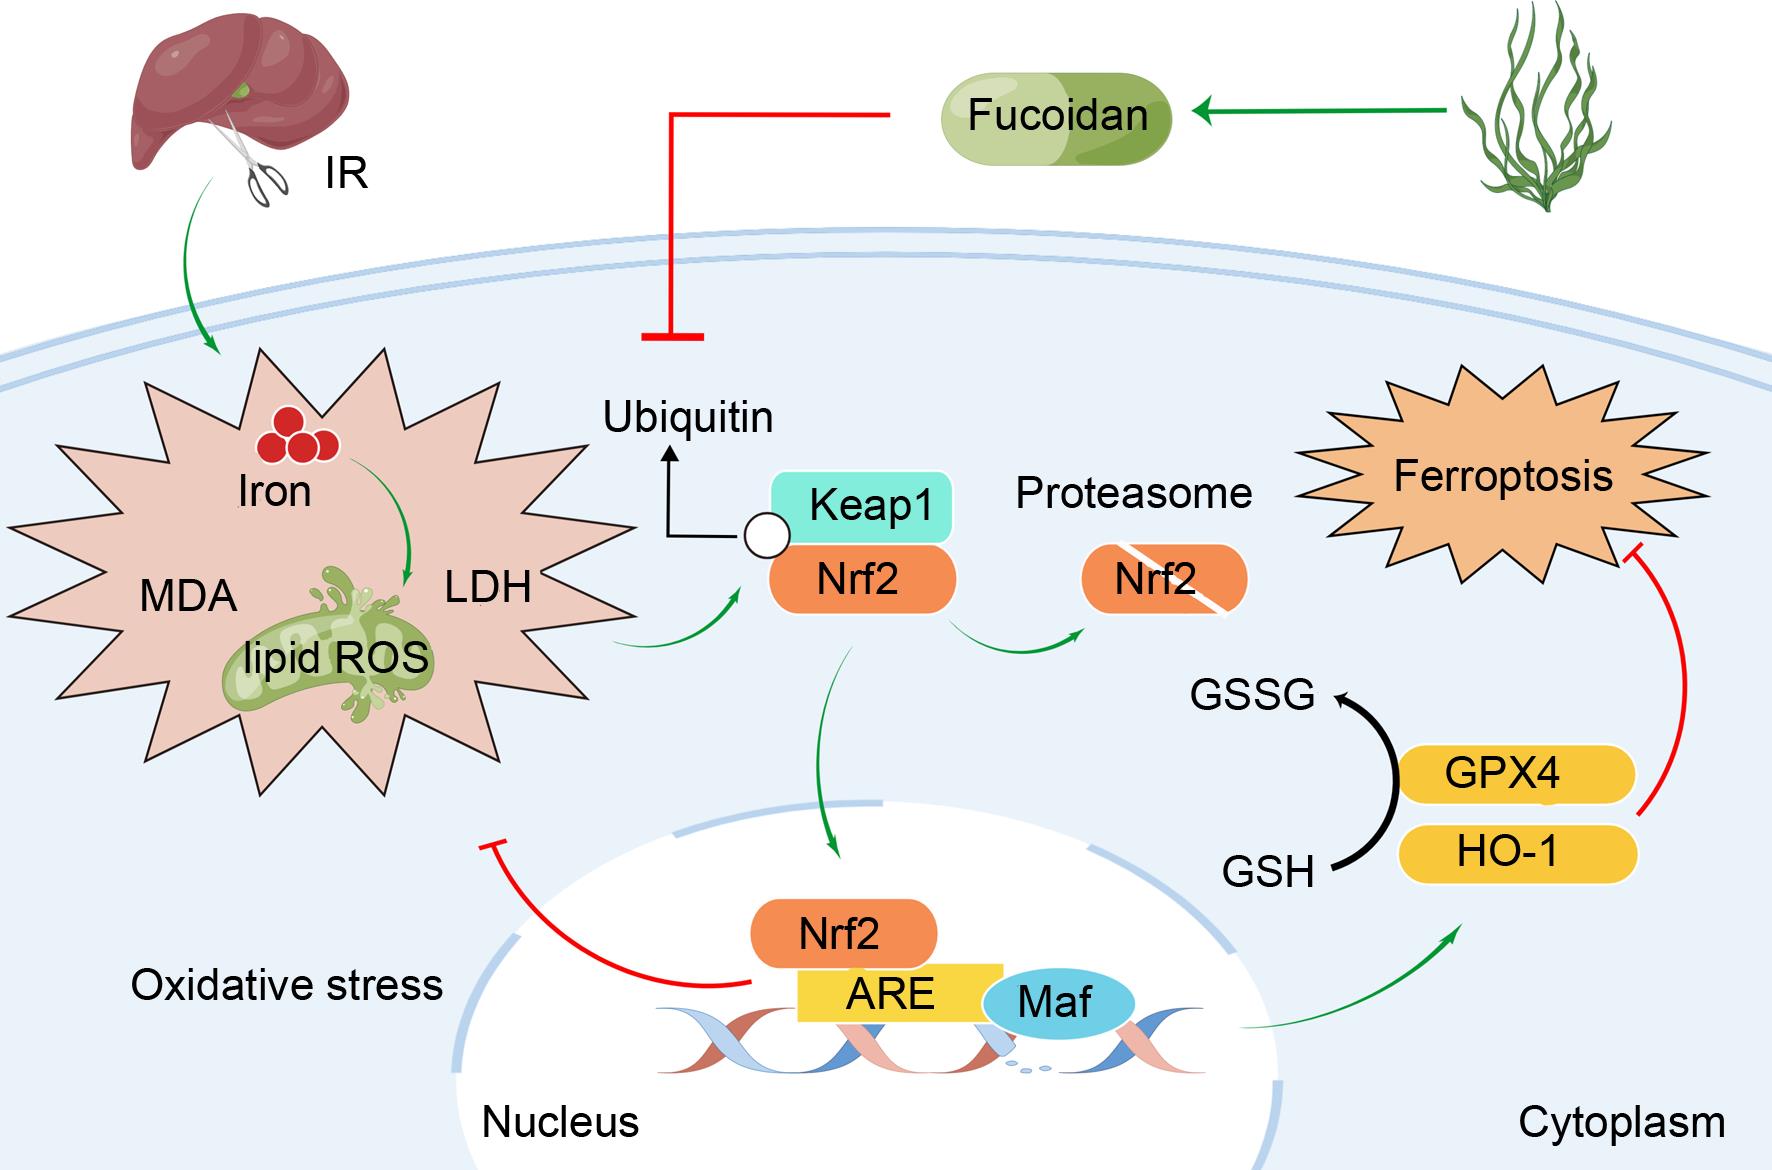 Mechanism of fucoidan action on ferroptosis via the Nrf2/HO-1/GPX4 axis.